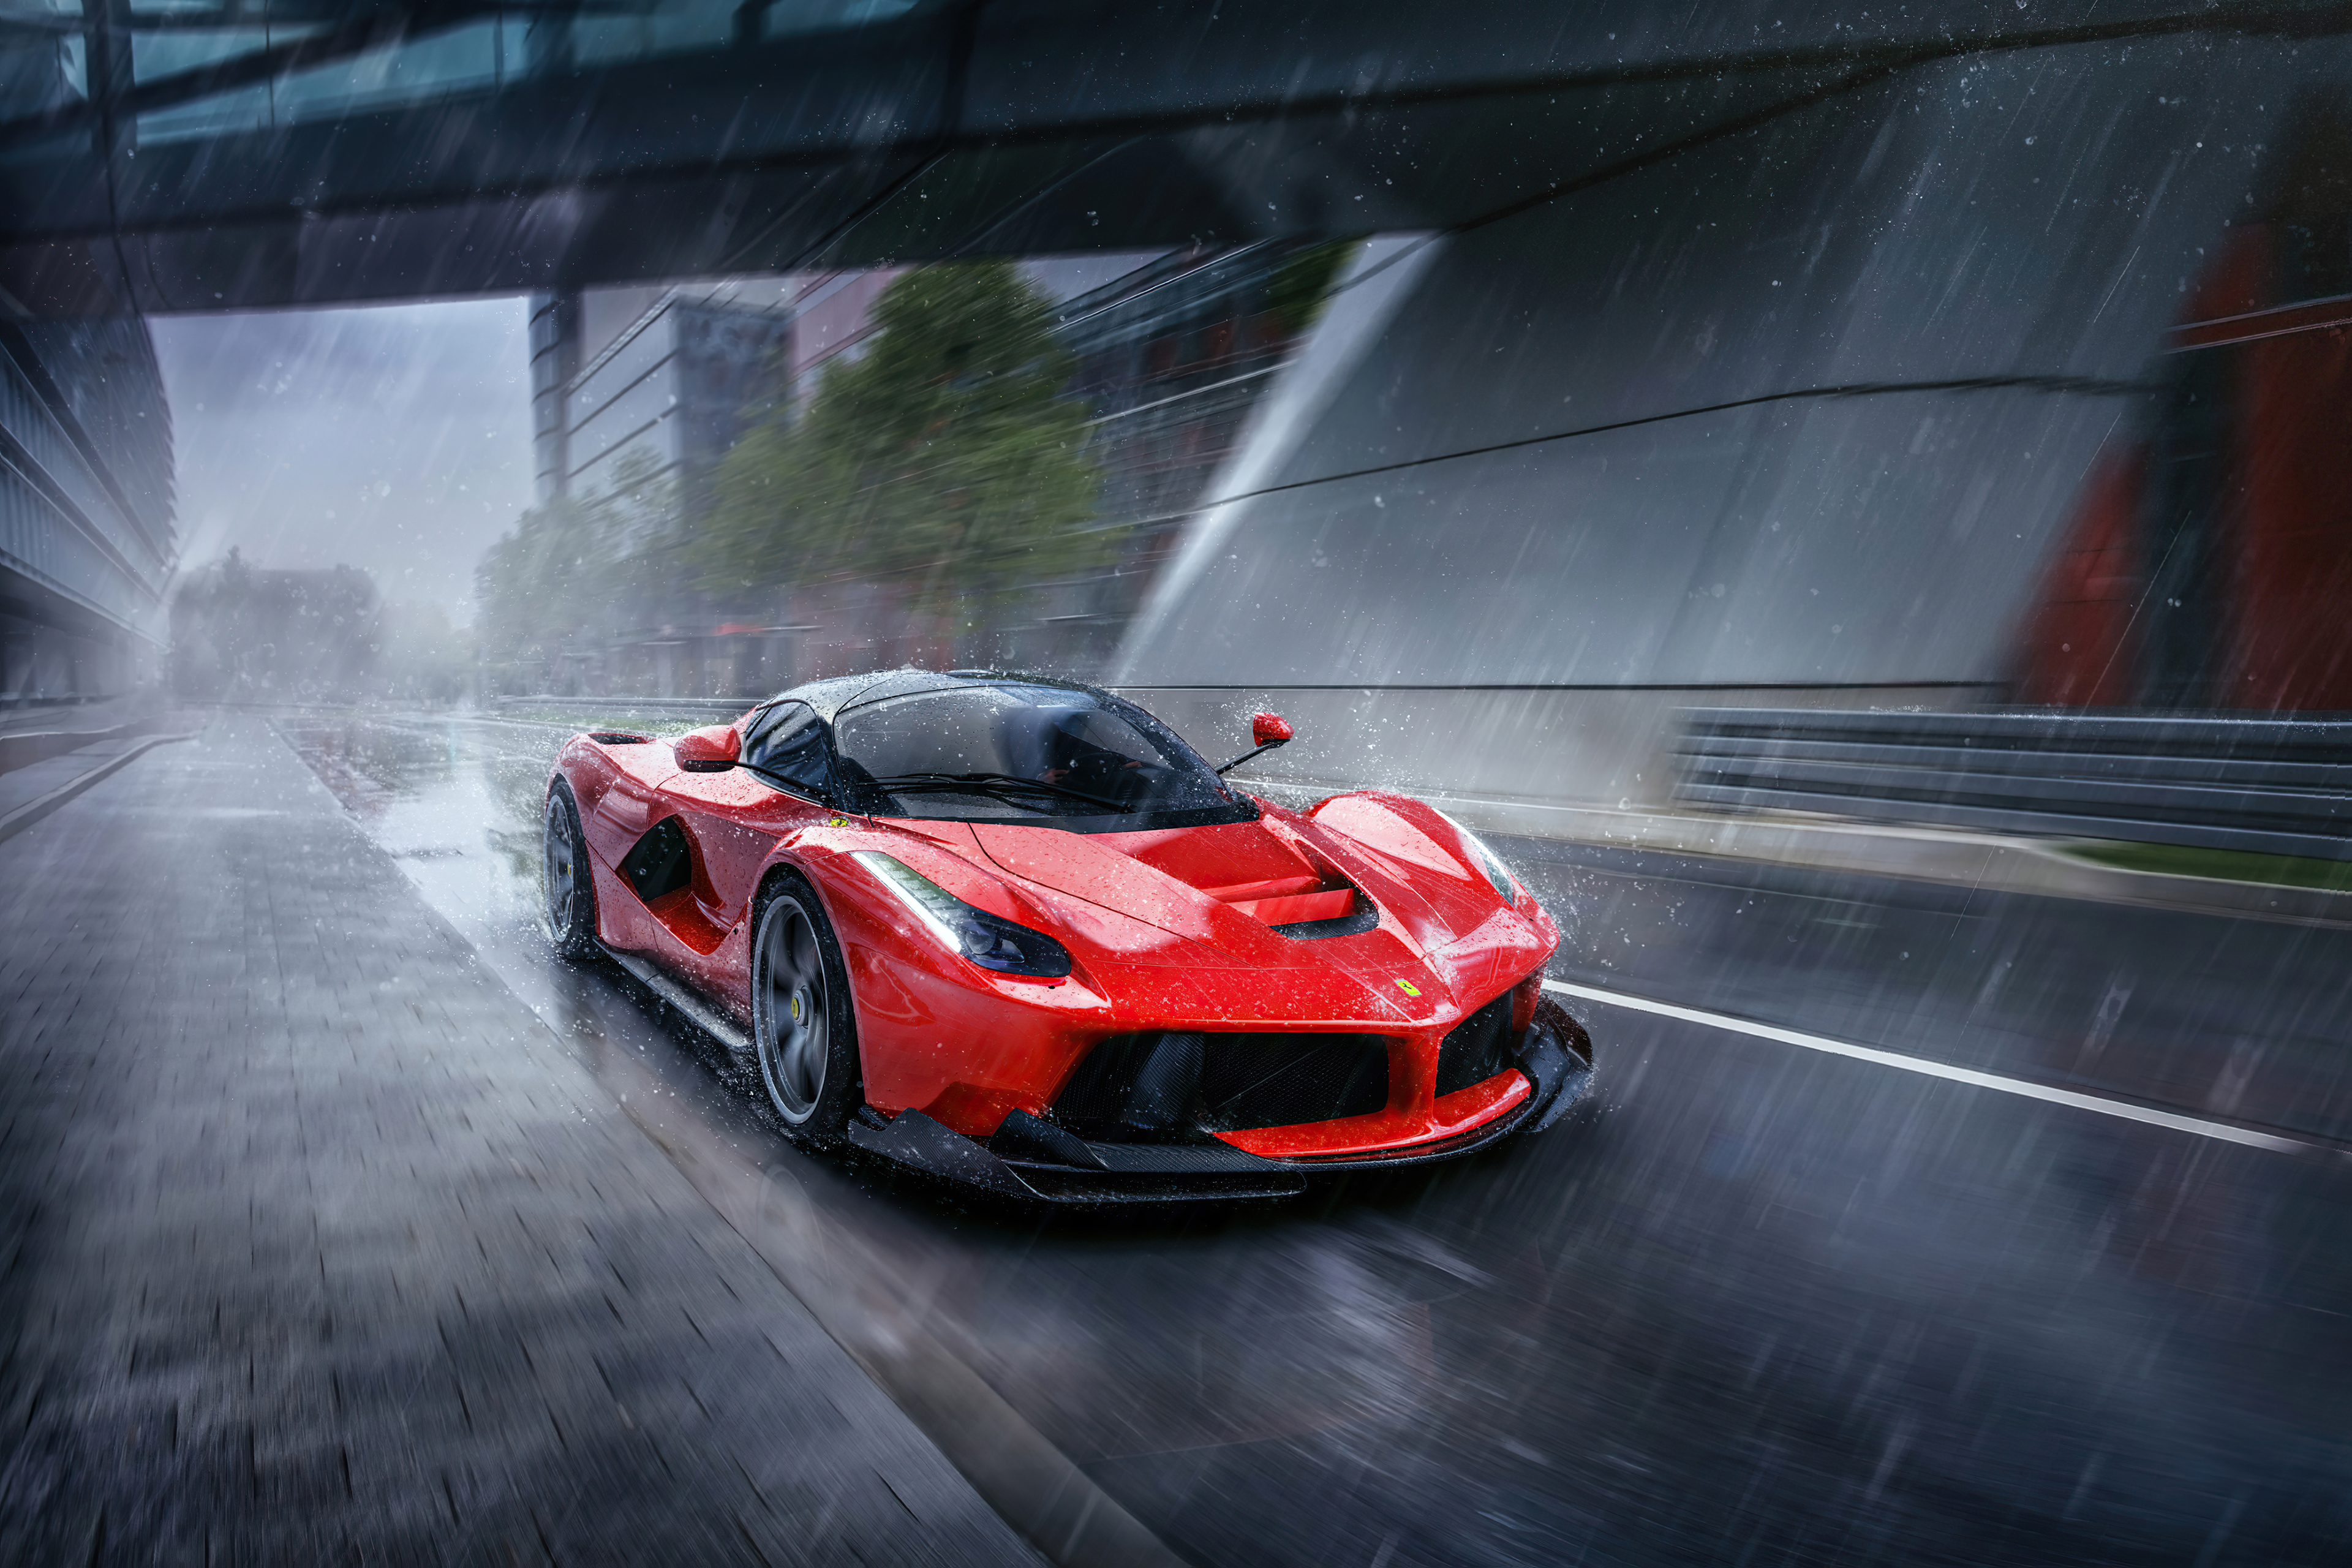 Red Ferrari HD wallpaper | Sports car picture, 4K UHD, desktop background,  automobile, free image